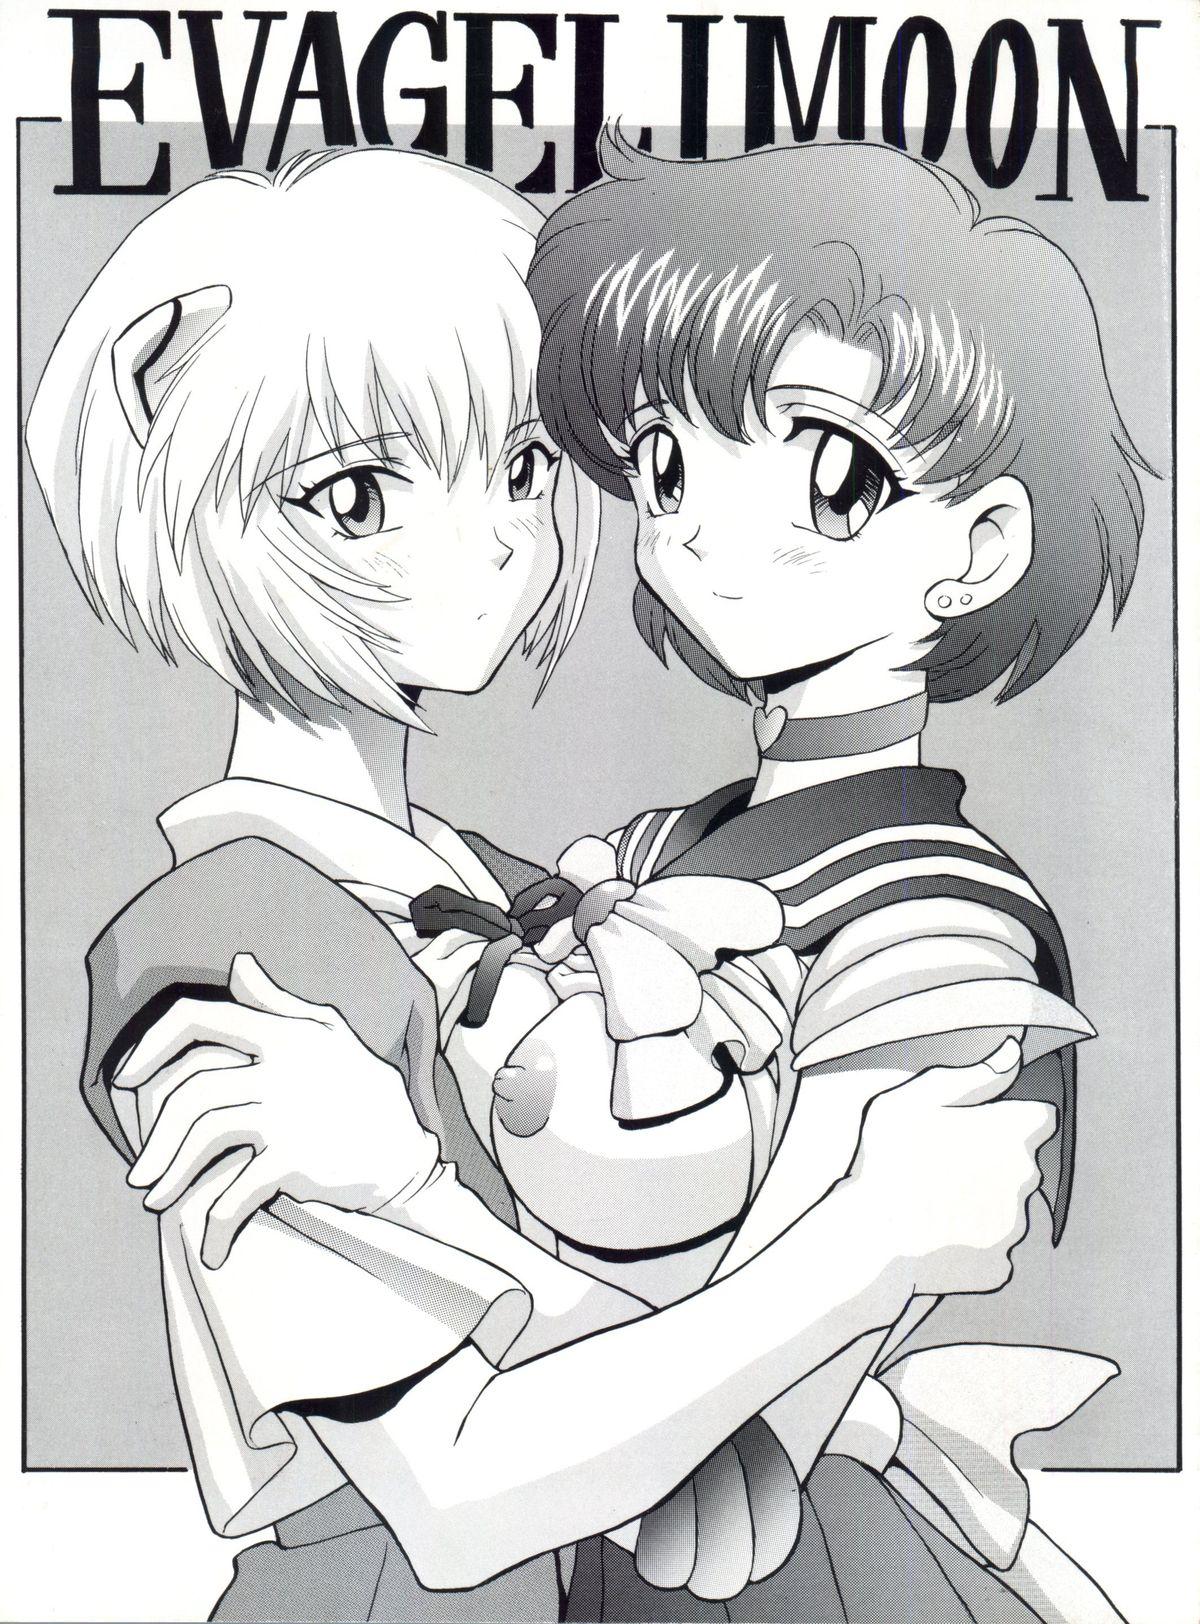 Secret Evagelimoon - Neon genesis evangelion Sailor moon Horny Slut - Picture 1